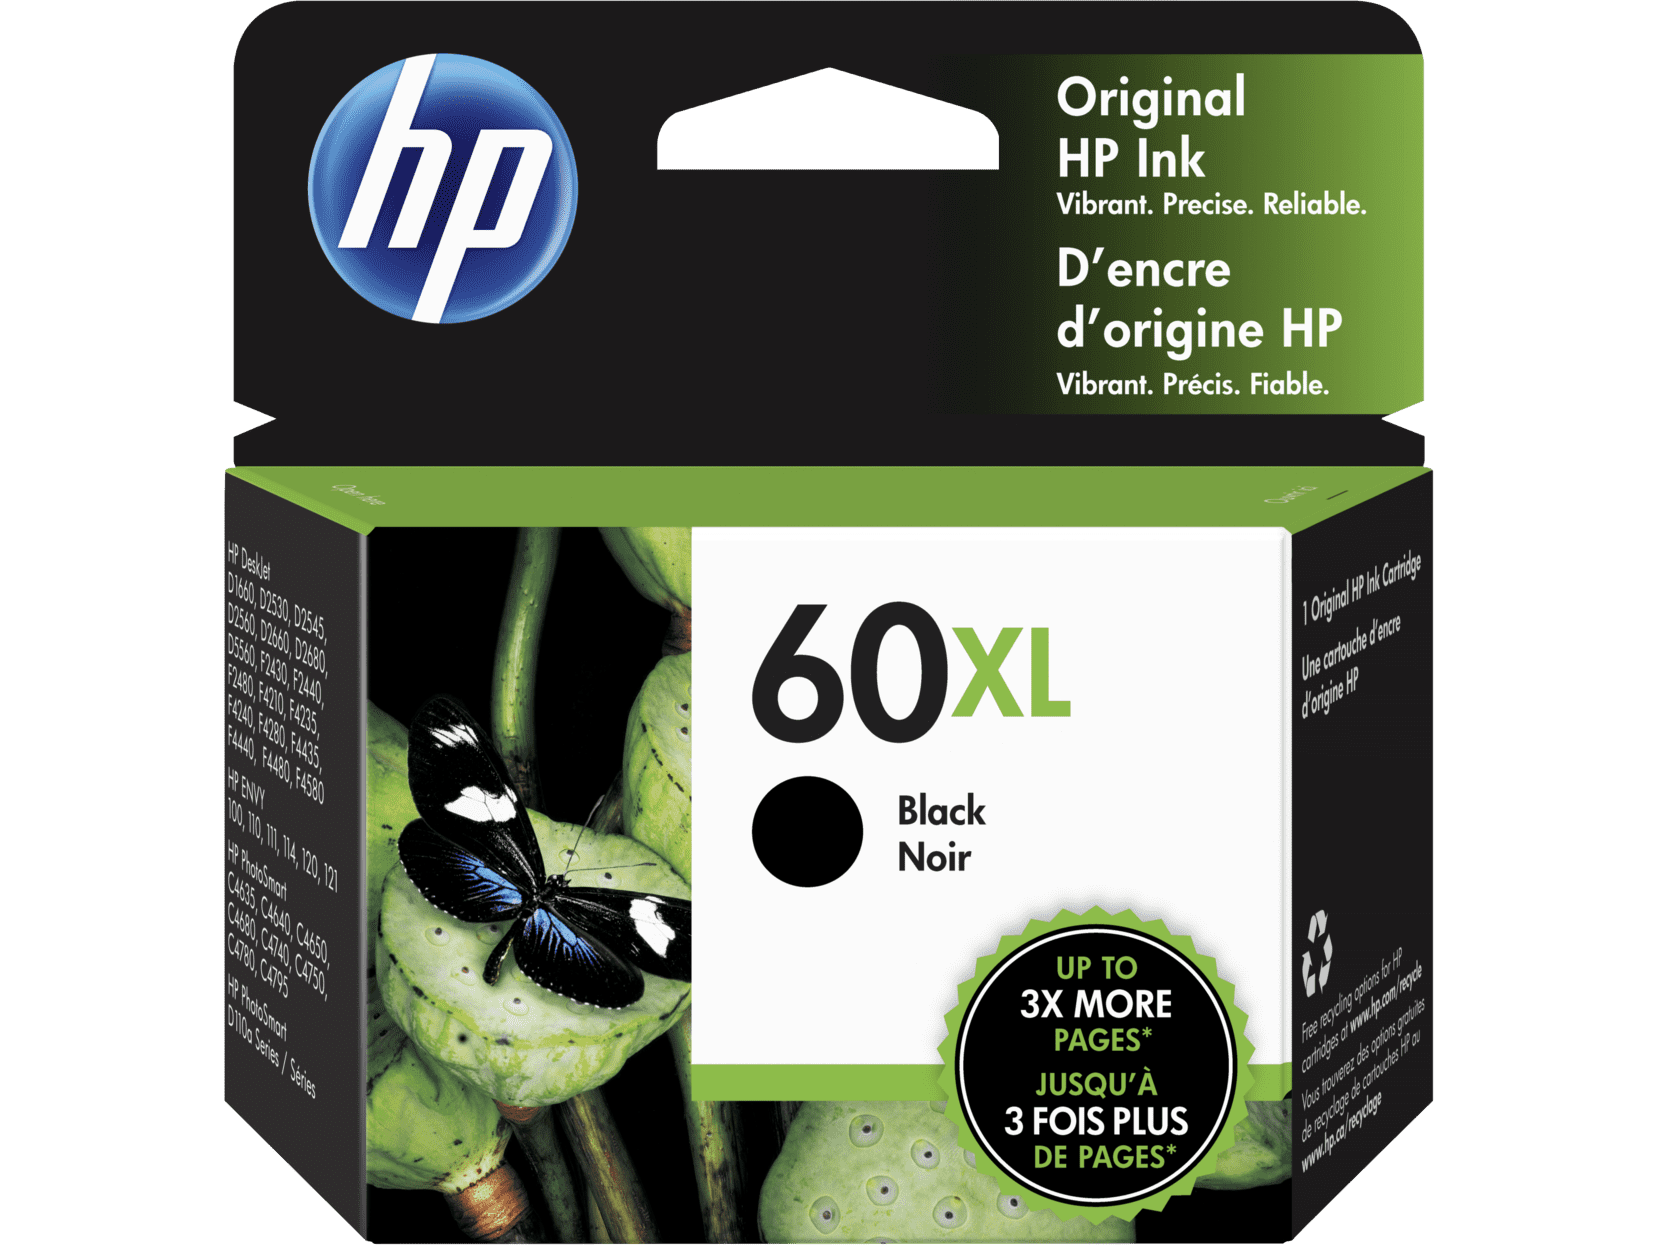 HP 60XL Ink Cartridge, Black (CC641WN)